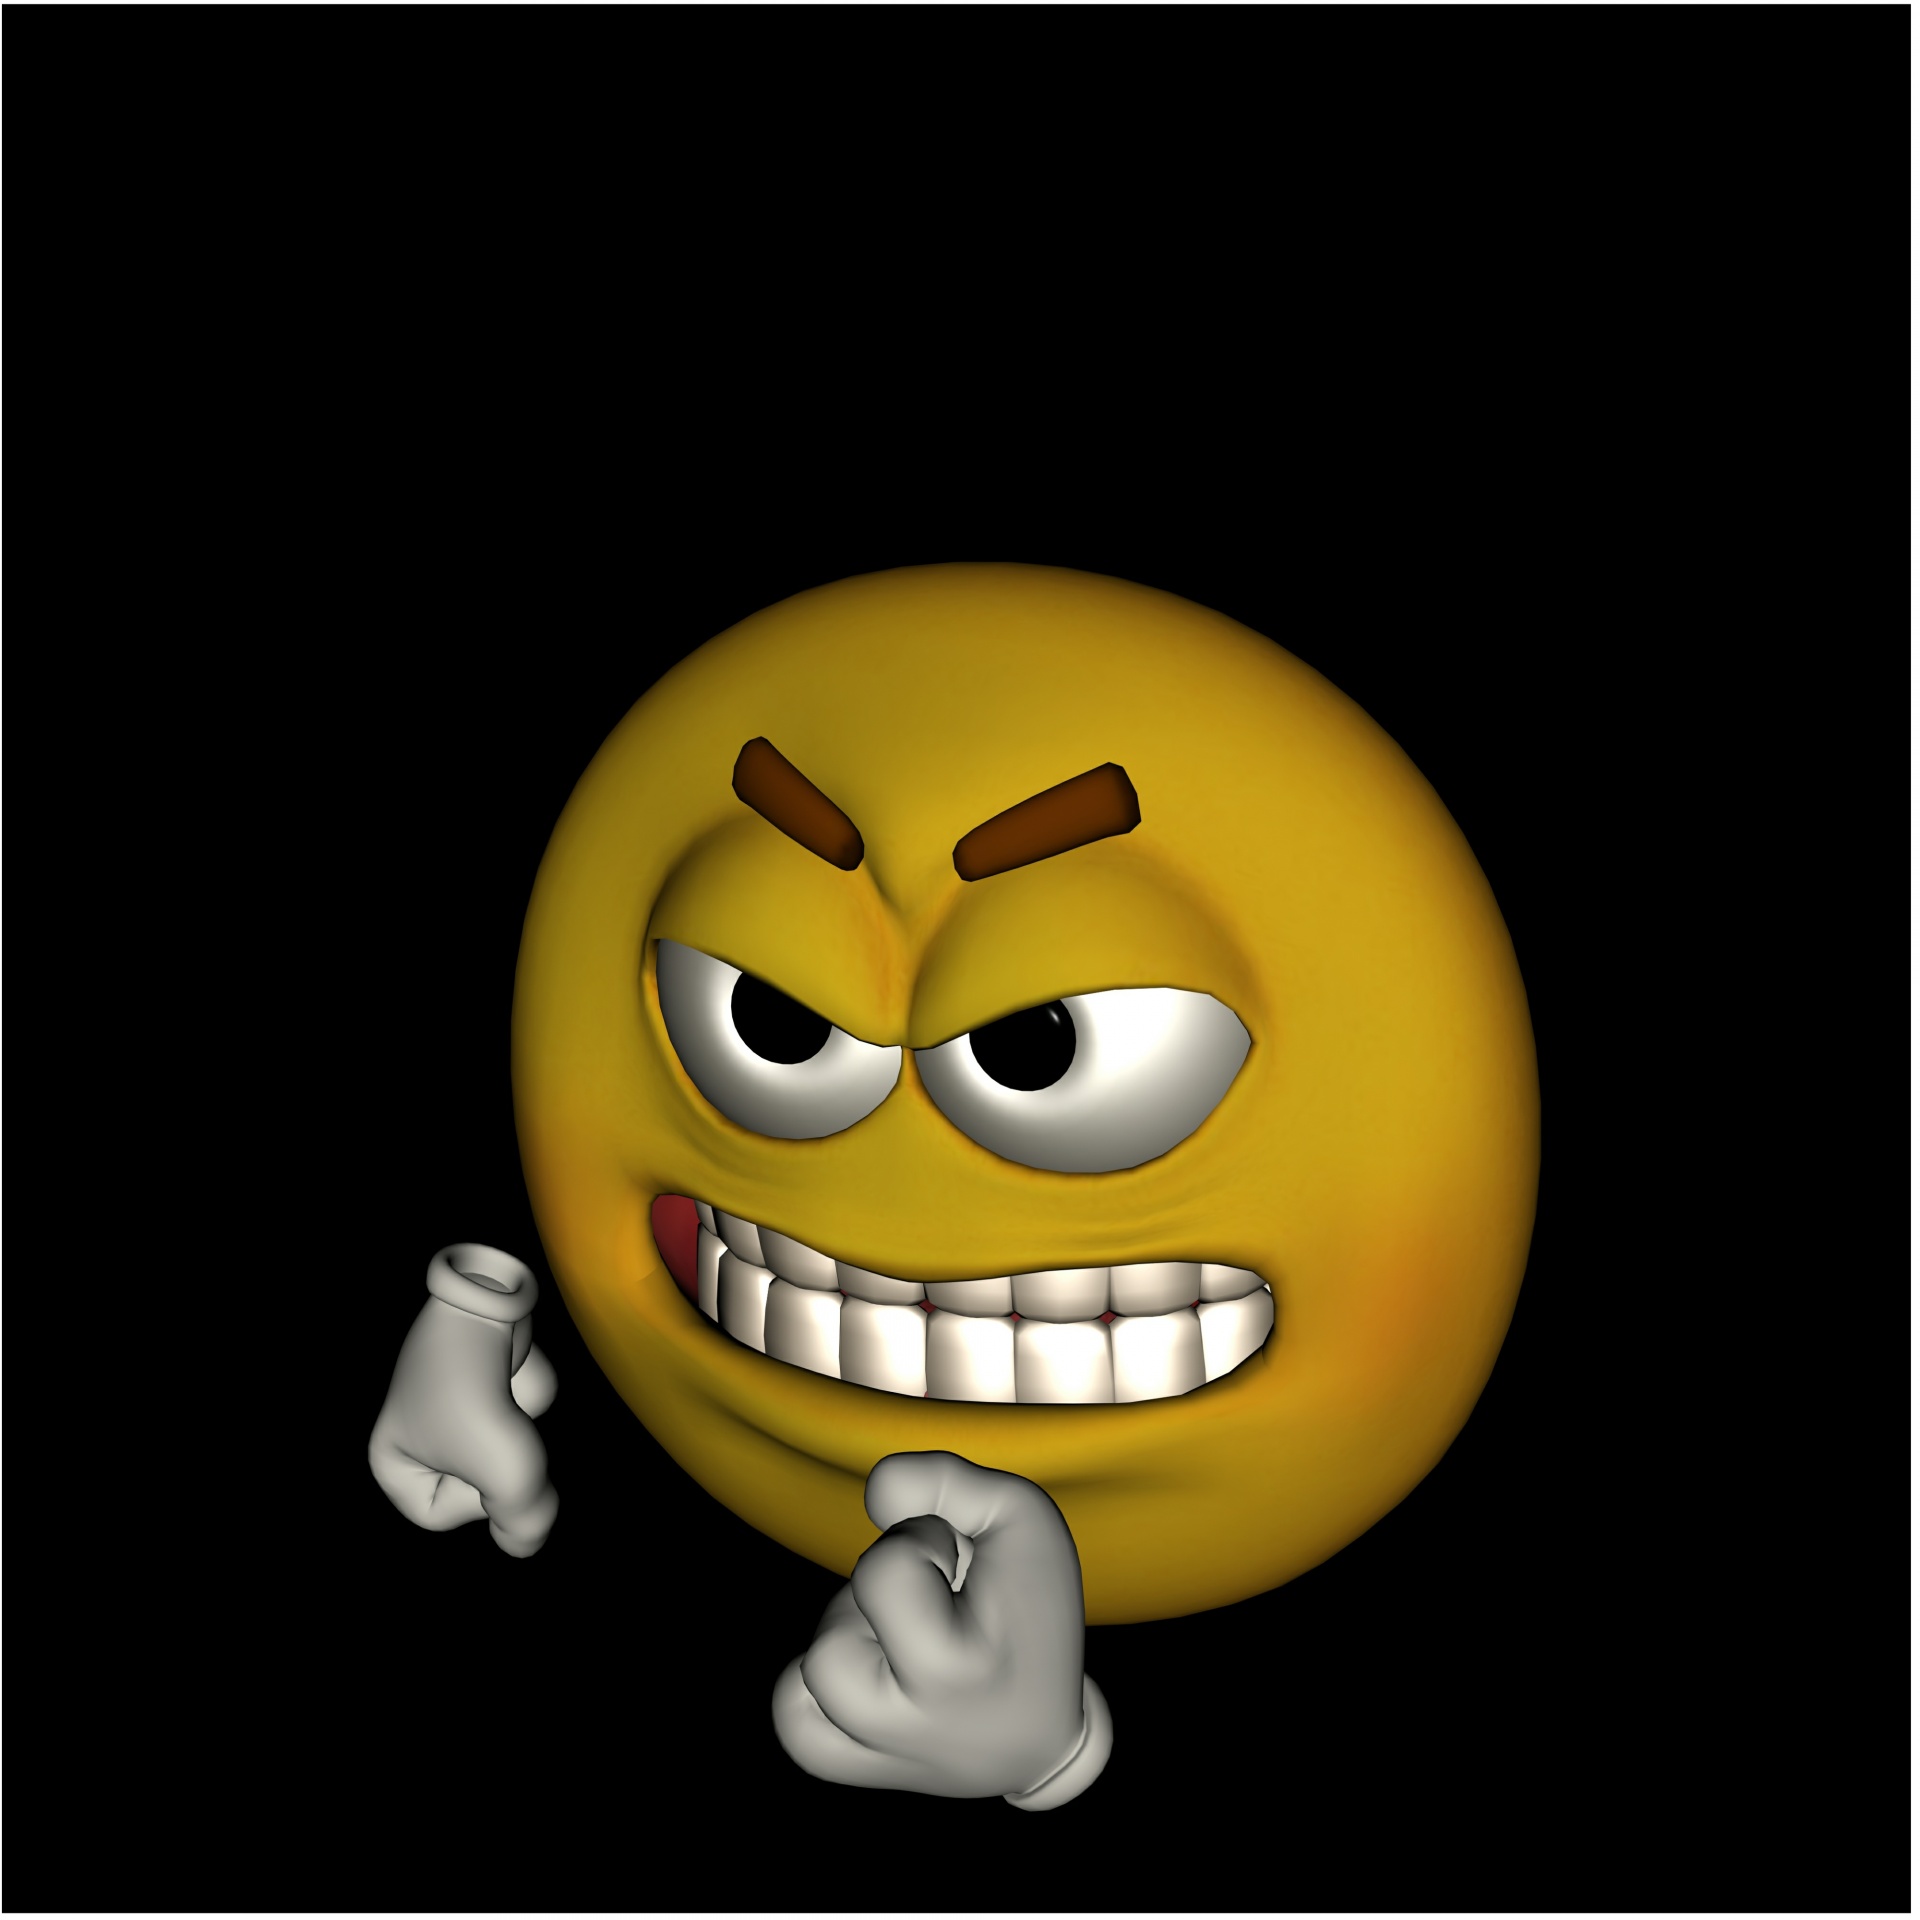 angry Smile emoticon Isolated illustration on black background